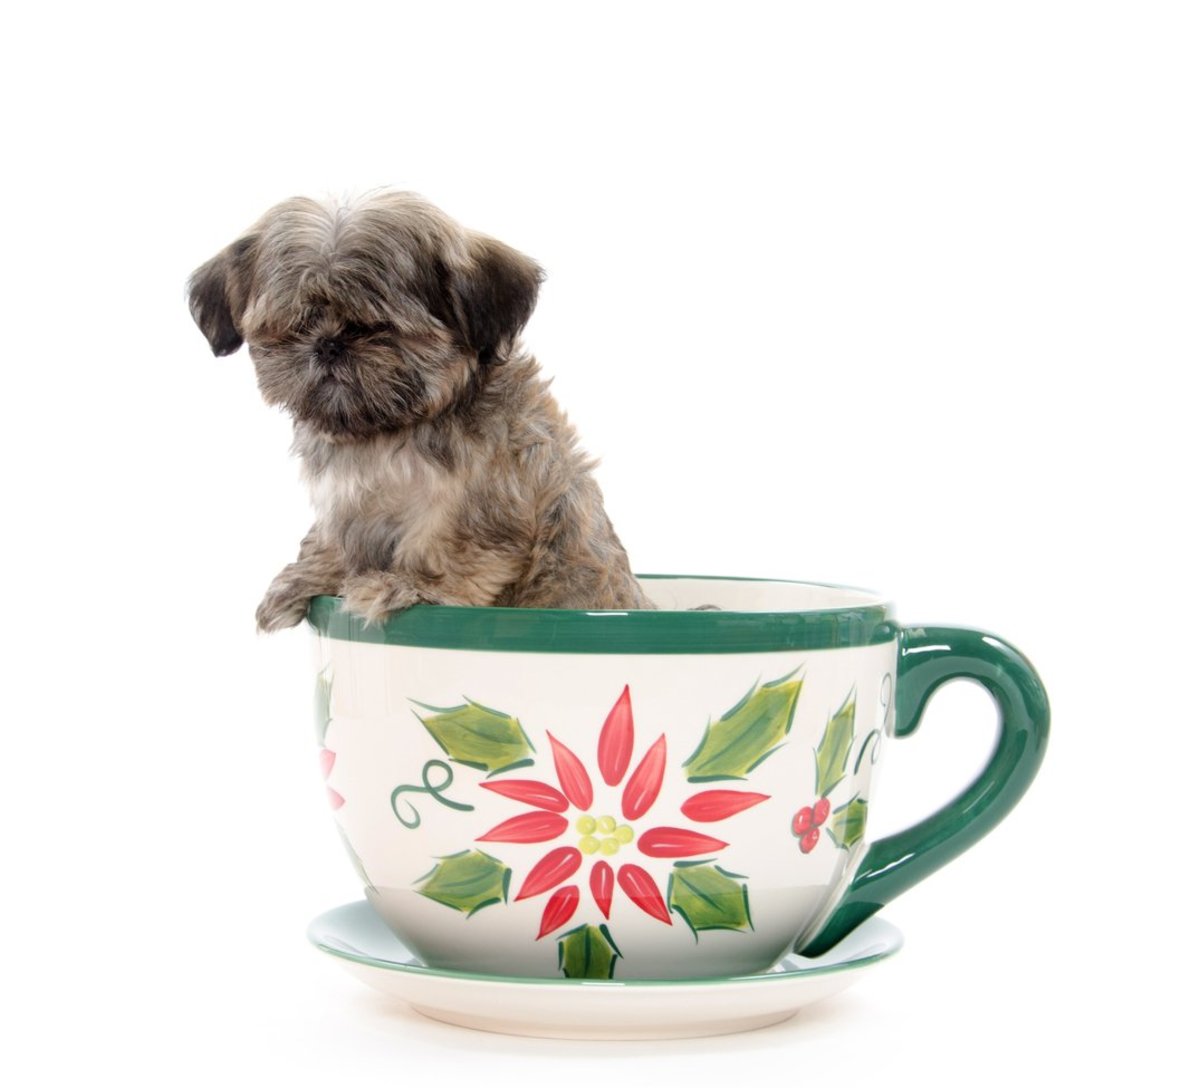 https://paradepets.com/.image/t_share/MTkxMzY1Nzg4NDExODMxOTA2/puppy-in-teapot.jpg